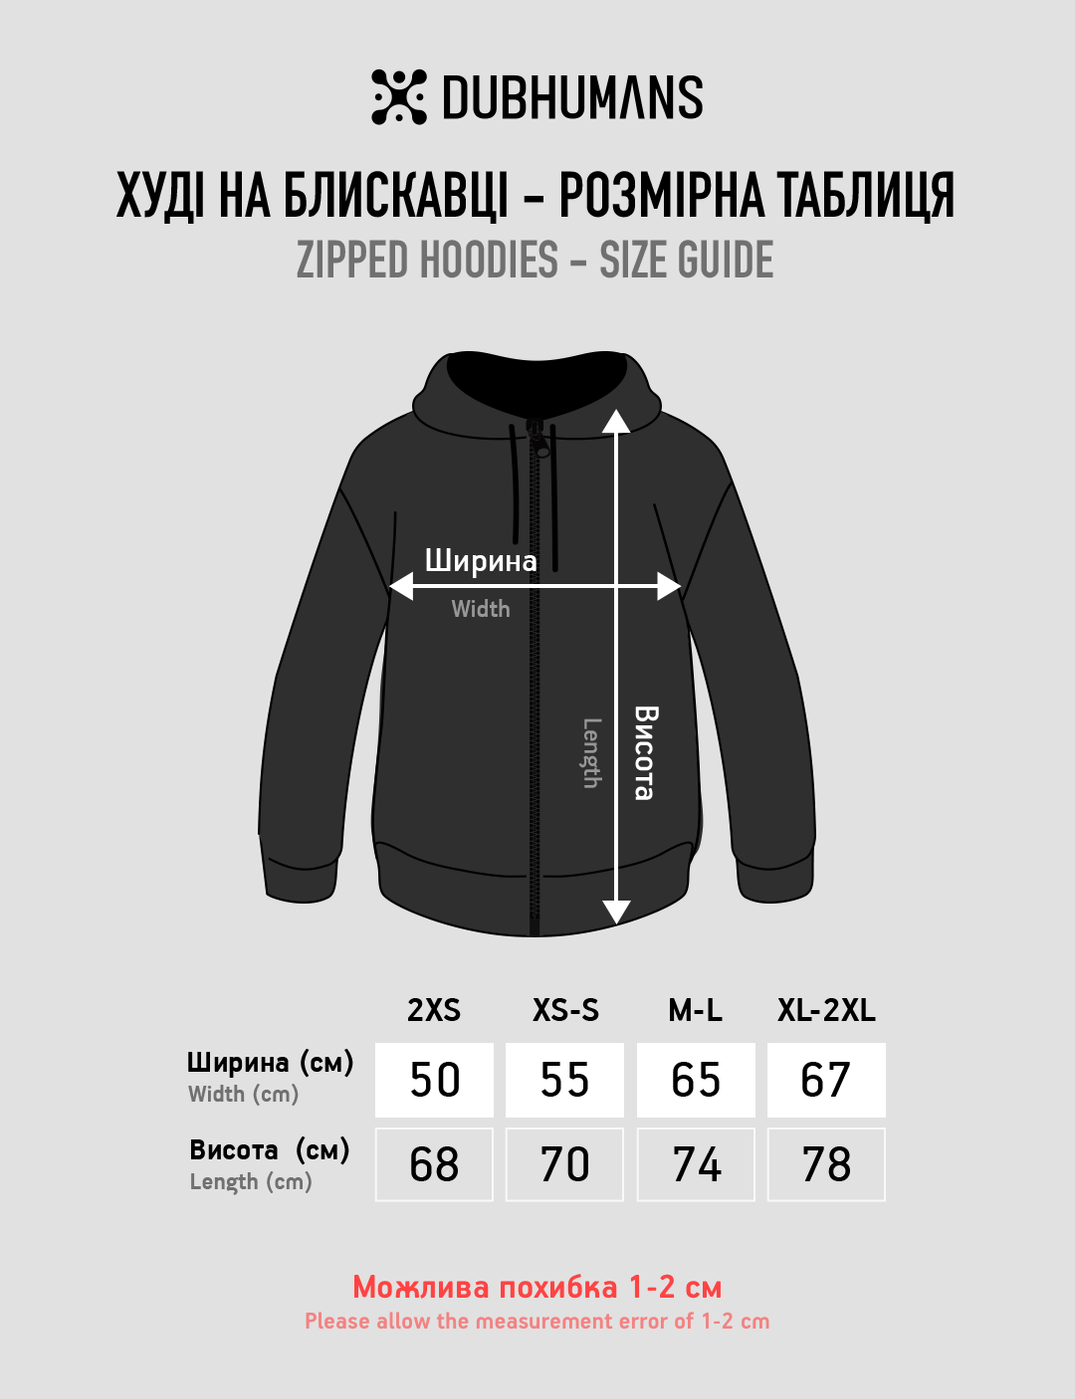 Men's tracksuit set with t-shirt “Sсhekavytsia”, Black, 2XS, XS (99  cm)